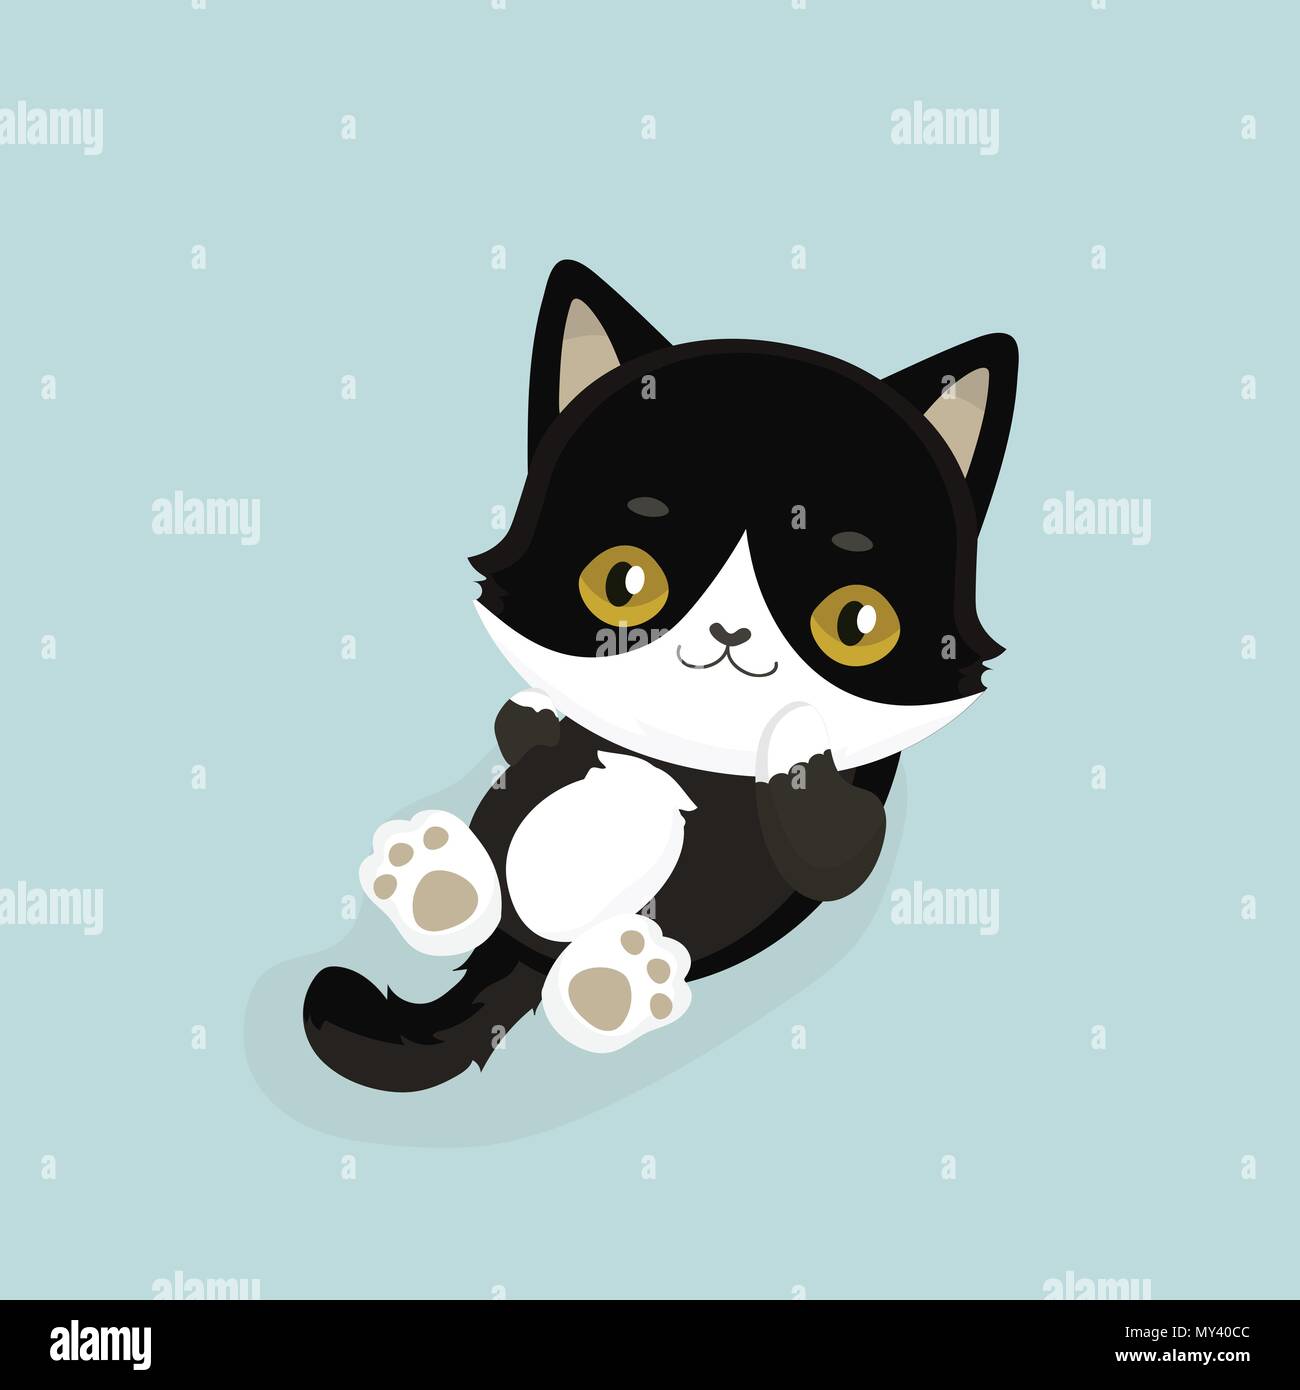 Simple cartoon black cat stock illustration. Illustration of blank -  137595320